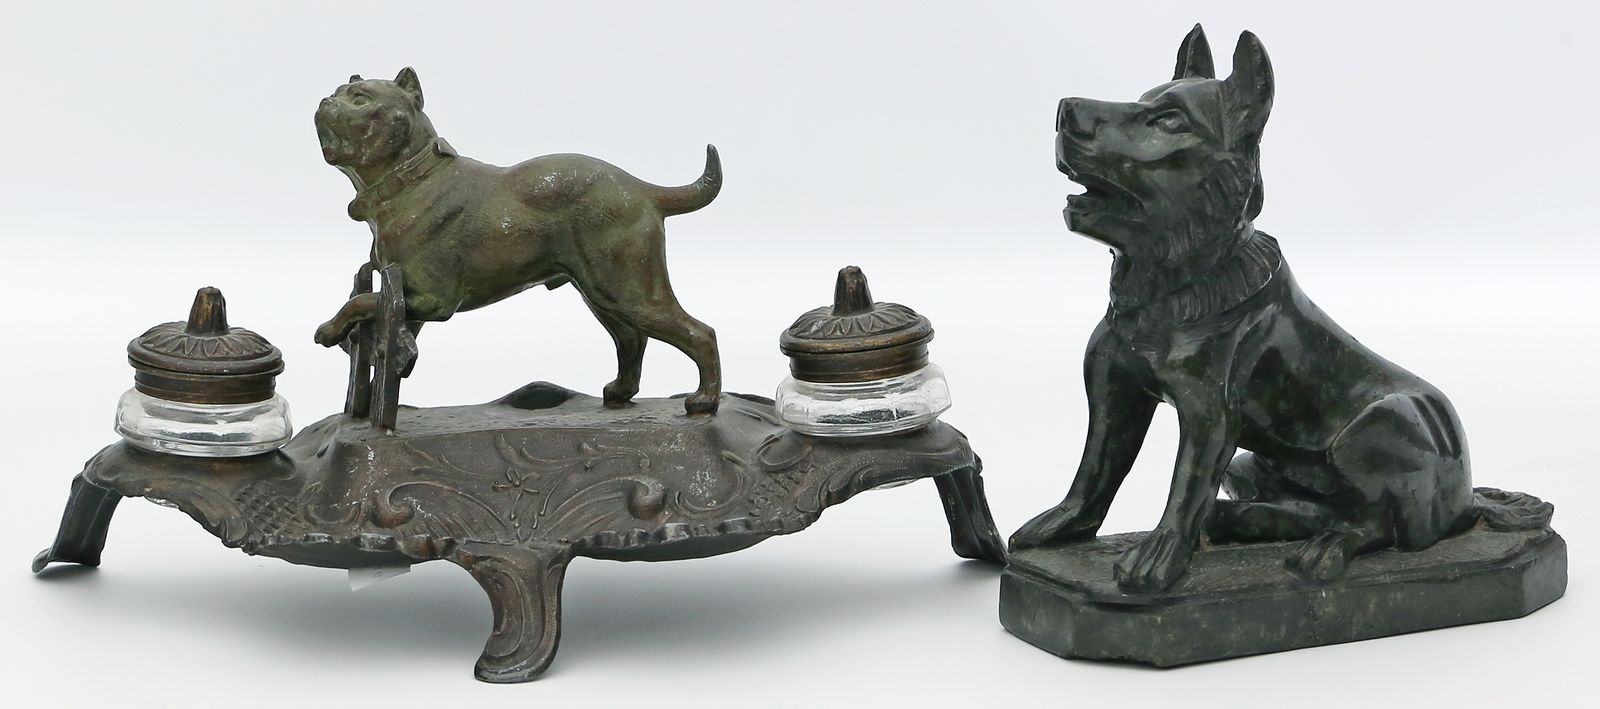 Hundeskulptur und Tintenfässer mit Hundeaufsatz.